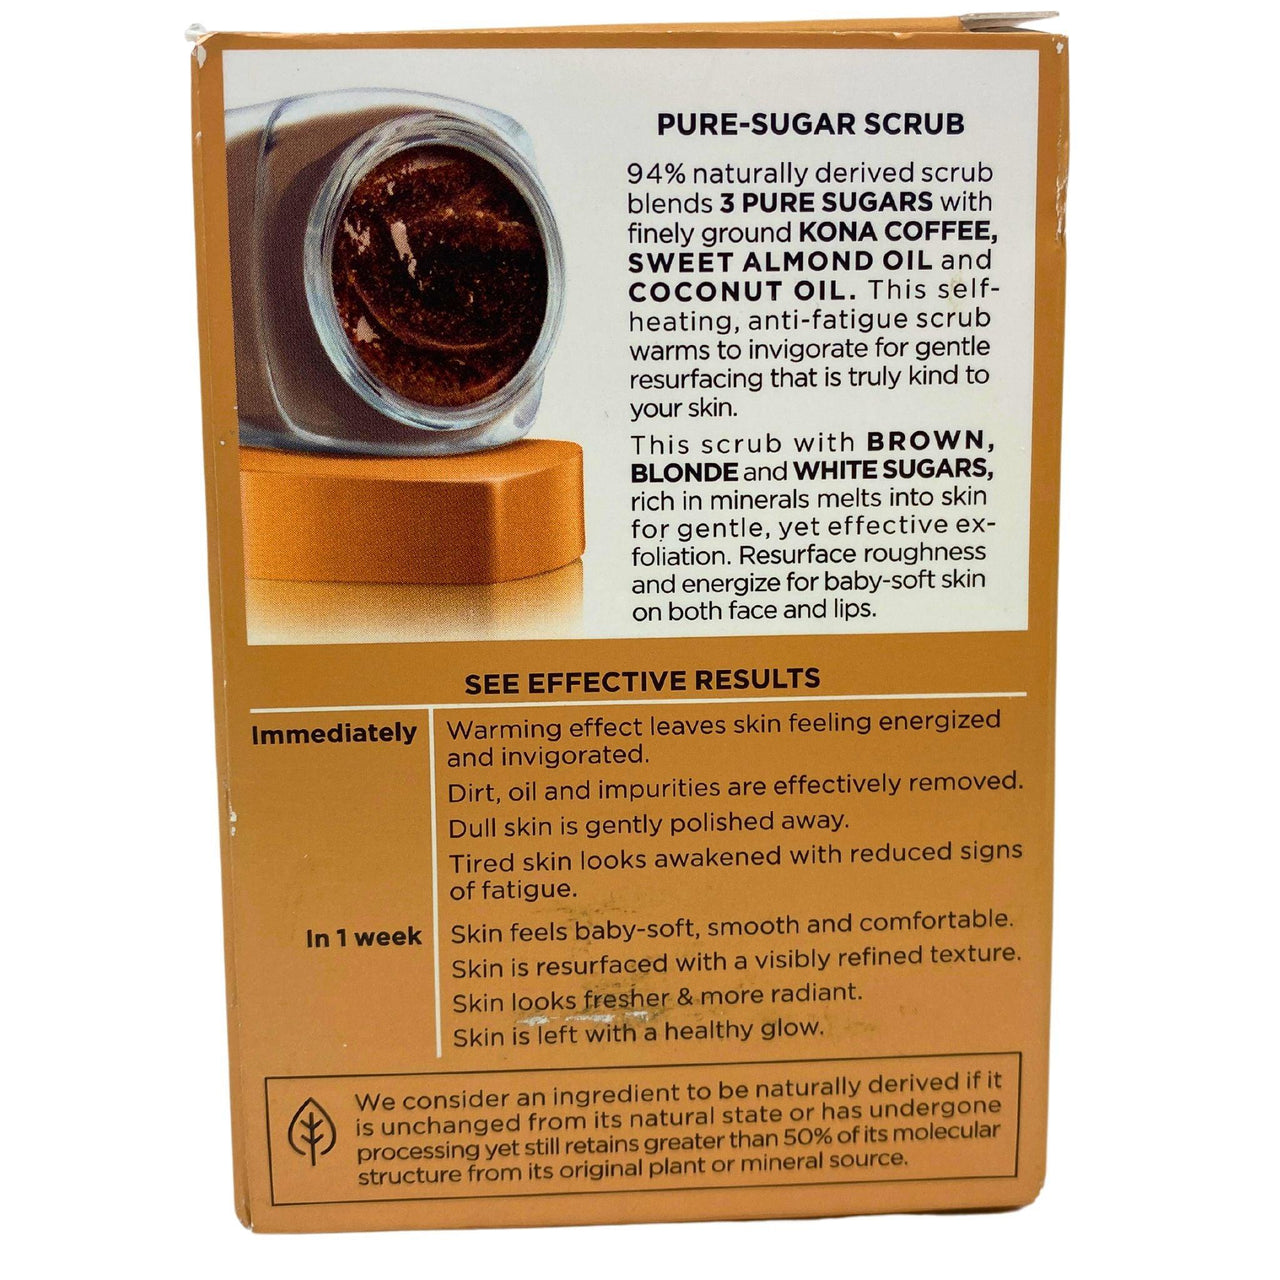 L'Oreal Paris Pure-Sugar Scrub Resurface & Energize 3 Pure Sugars 1.7OZ (50 Pcs Lot) - Discount Wholesalers Inc